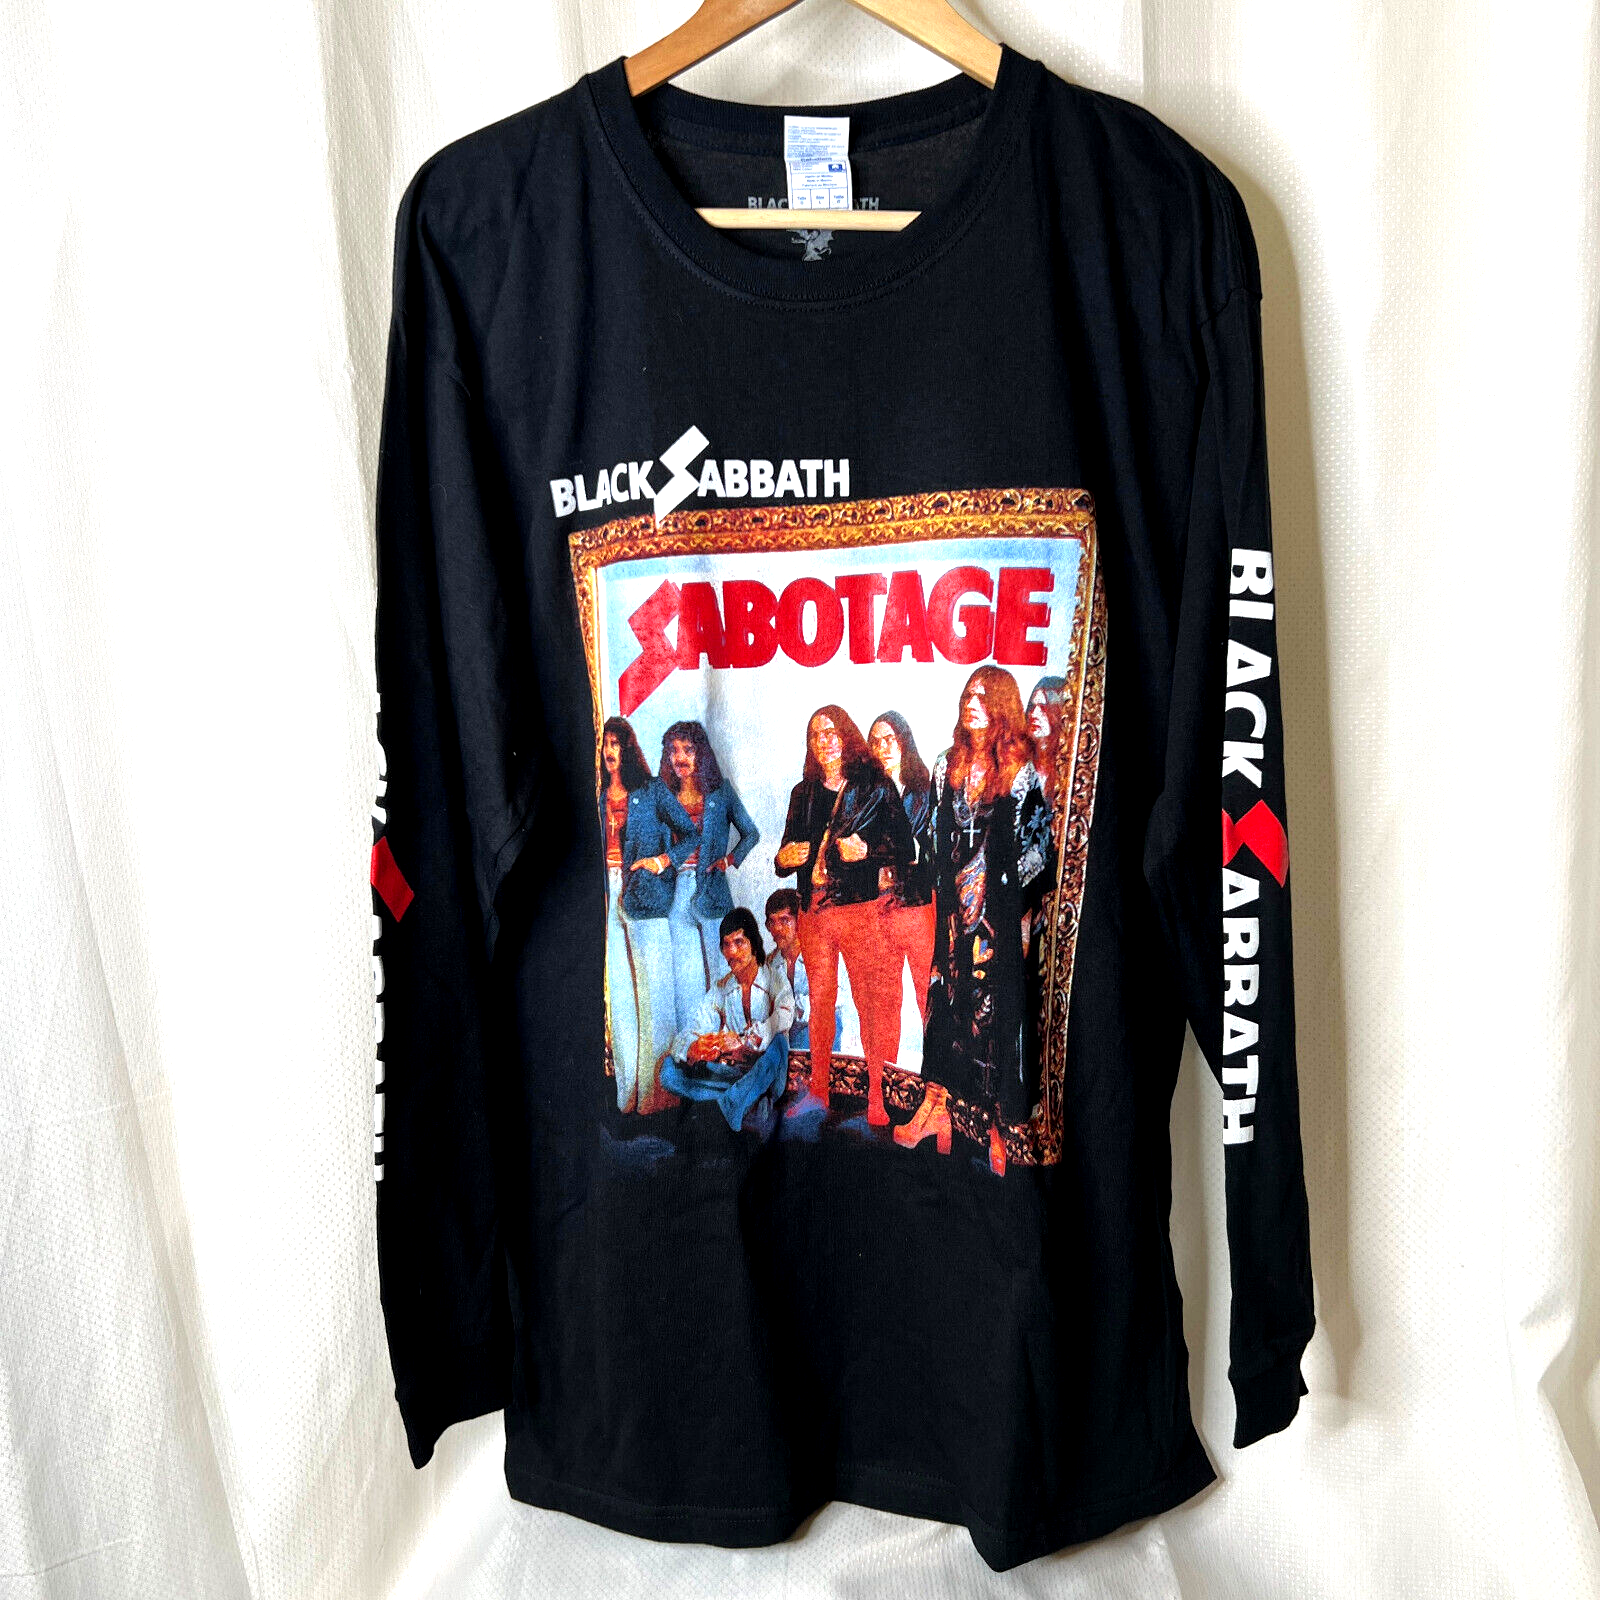 New Black Sabbath Sabotage Long Sleeve Shirt - $29.99